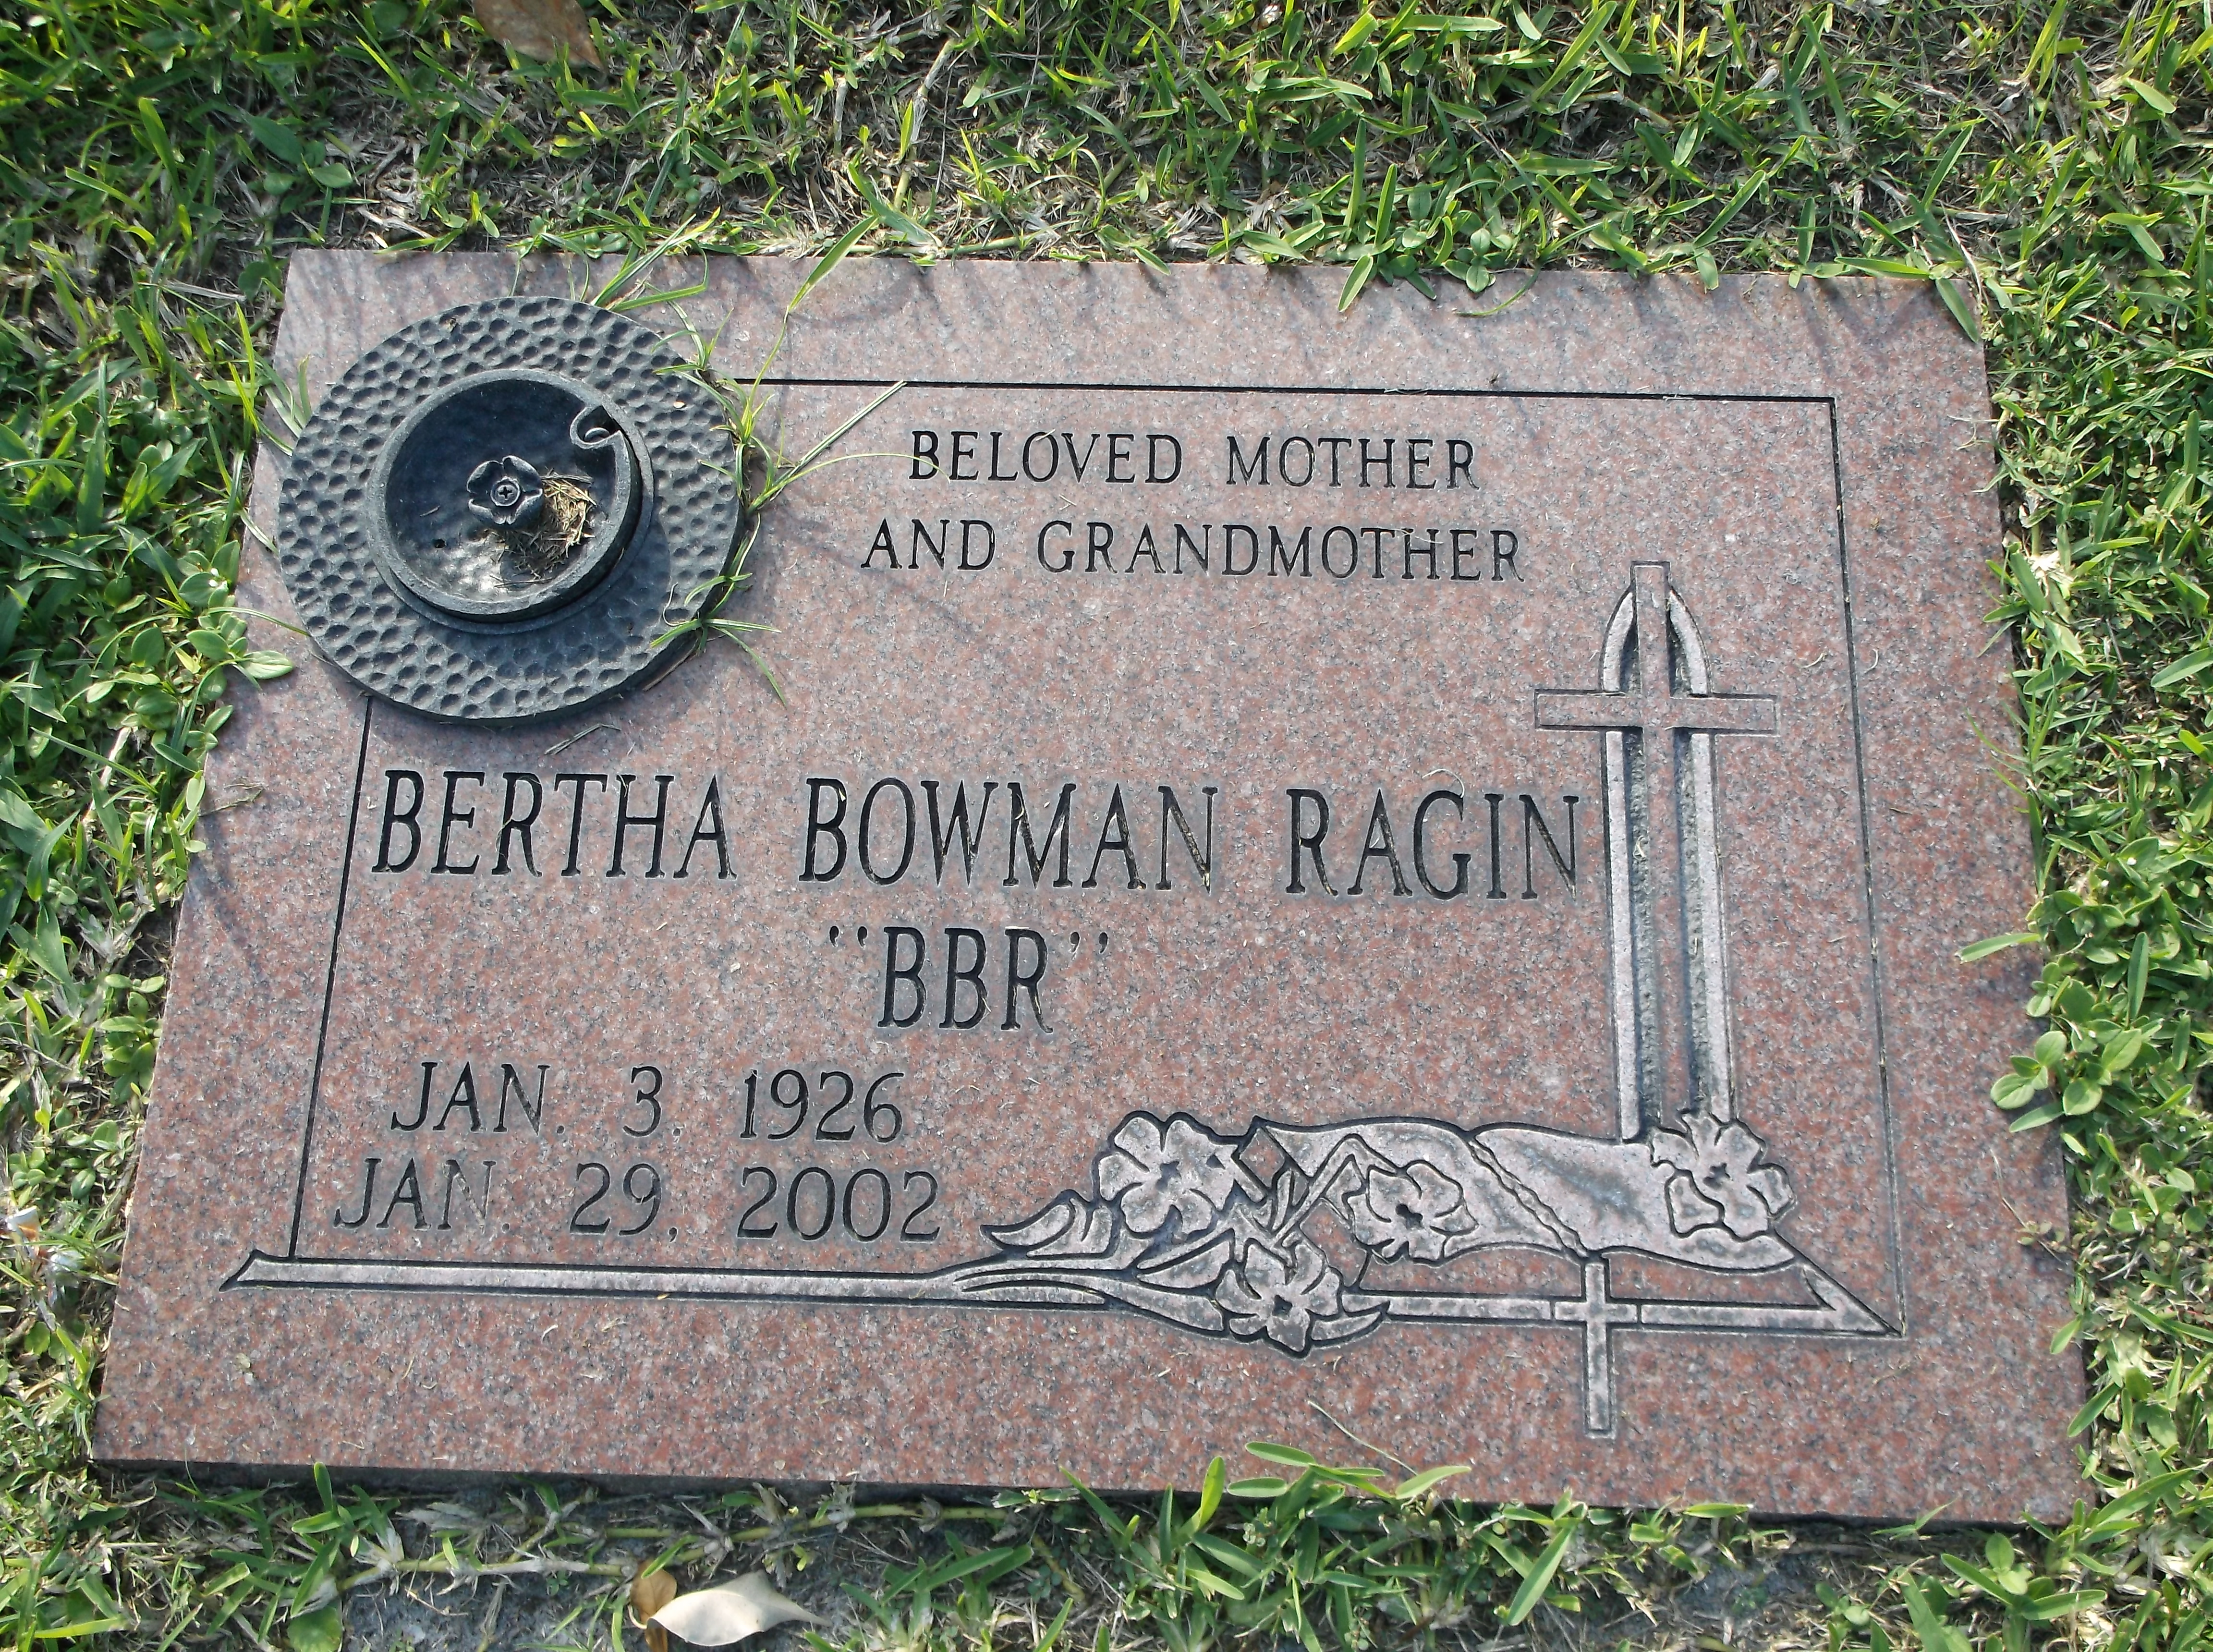 Bertha "BBR" Bowman Ragin